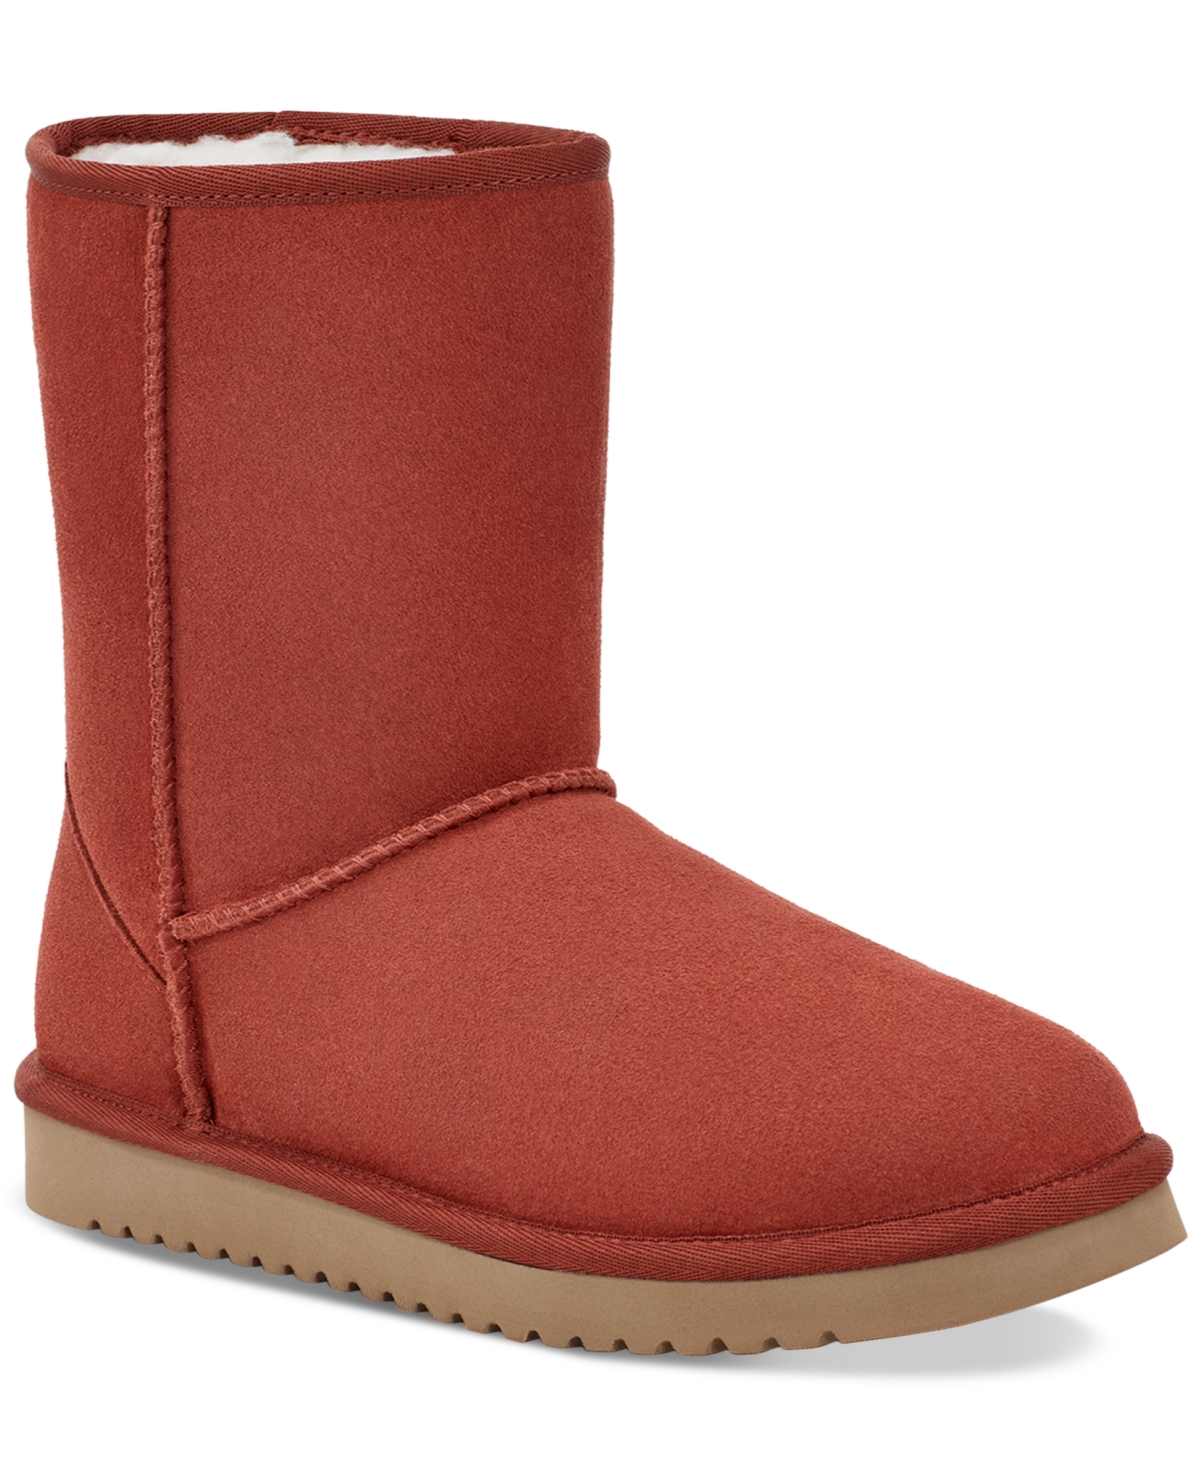 Women's Koola Short Boots - Red Sand